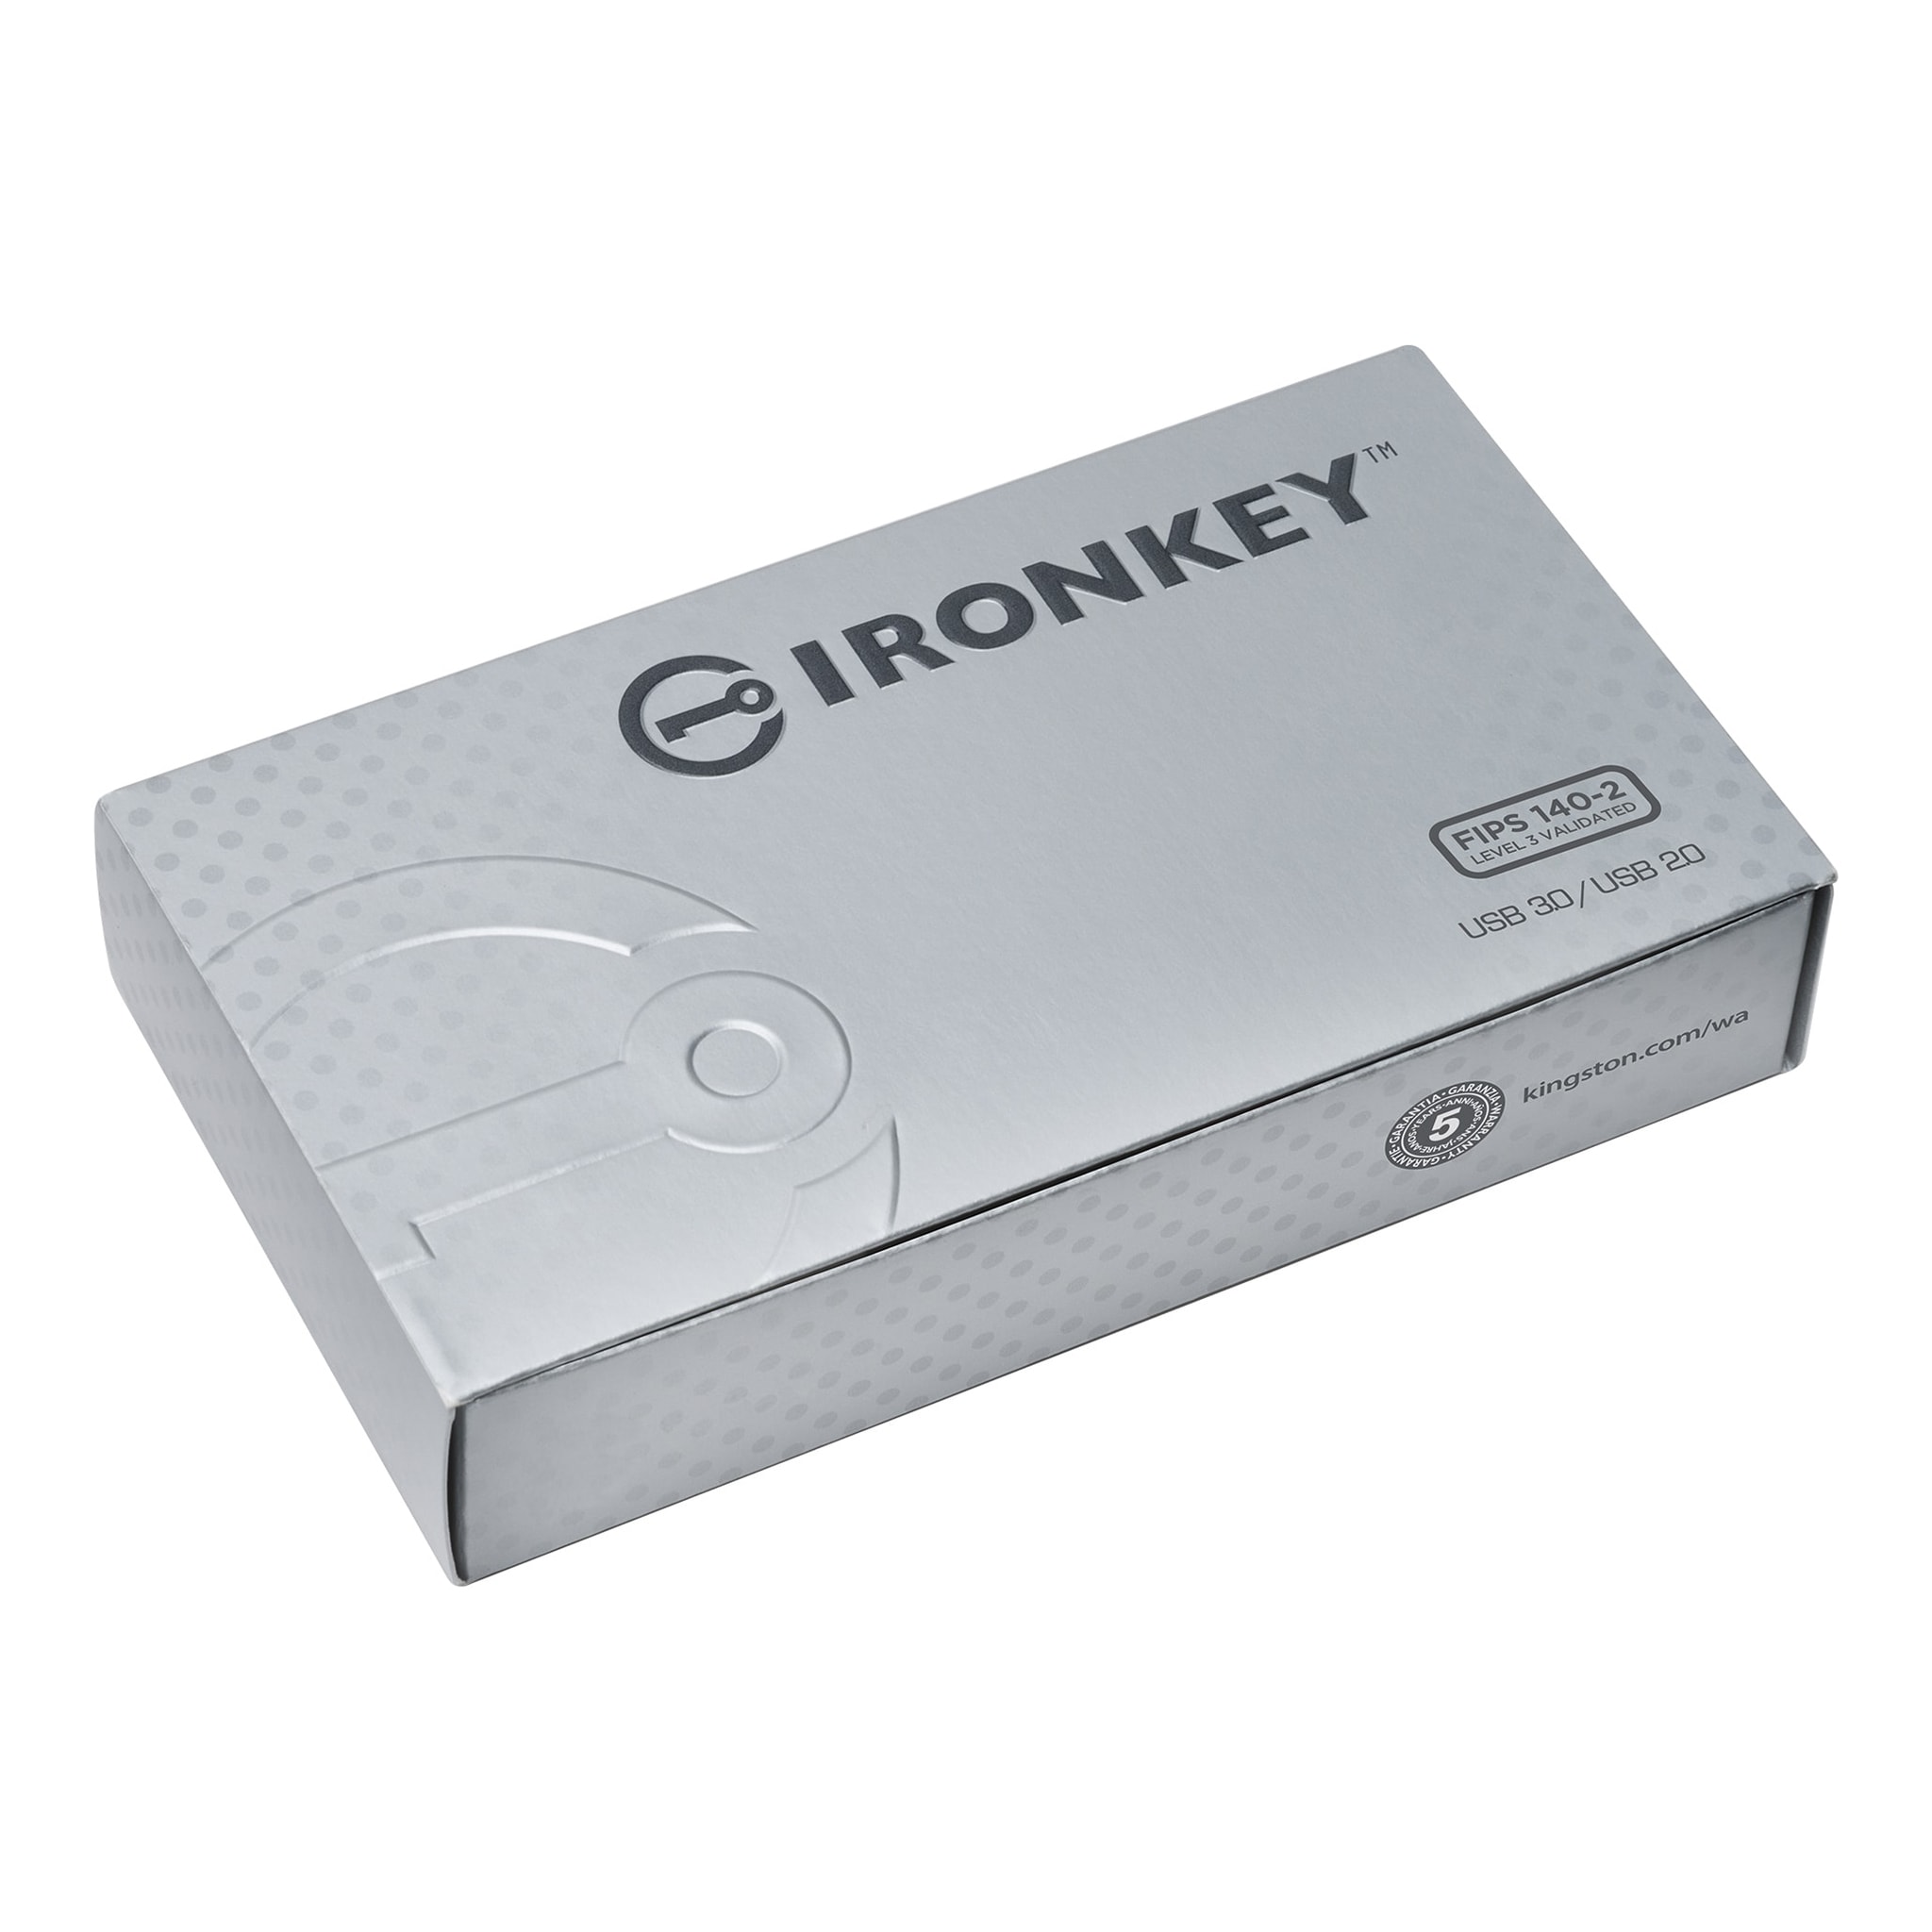 內建Cryptochip 的IronKey S1000 USB 隨身碟- 4GB 至128GB - Kingston 